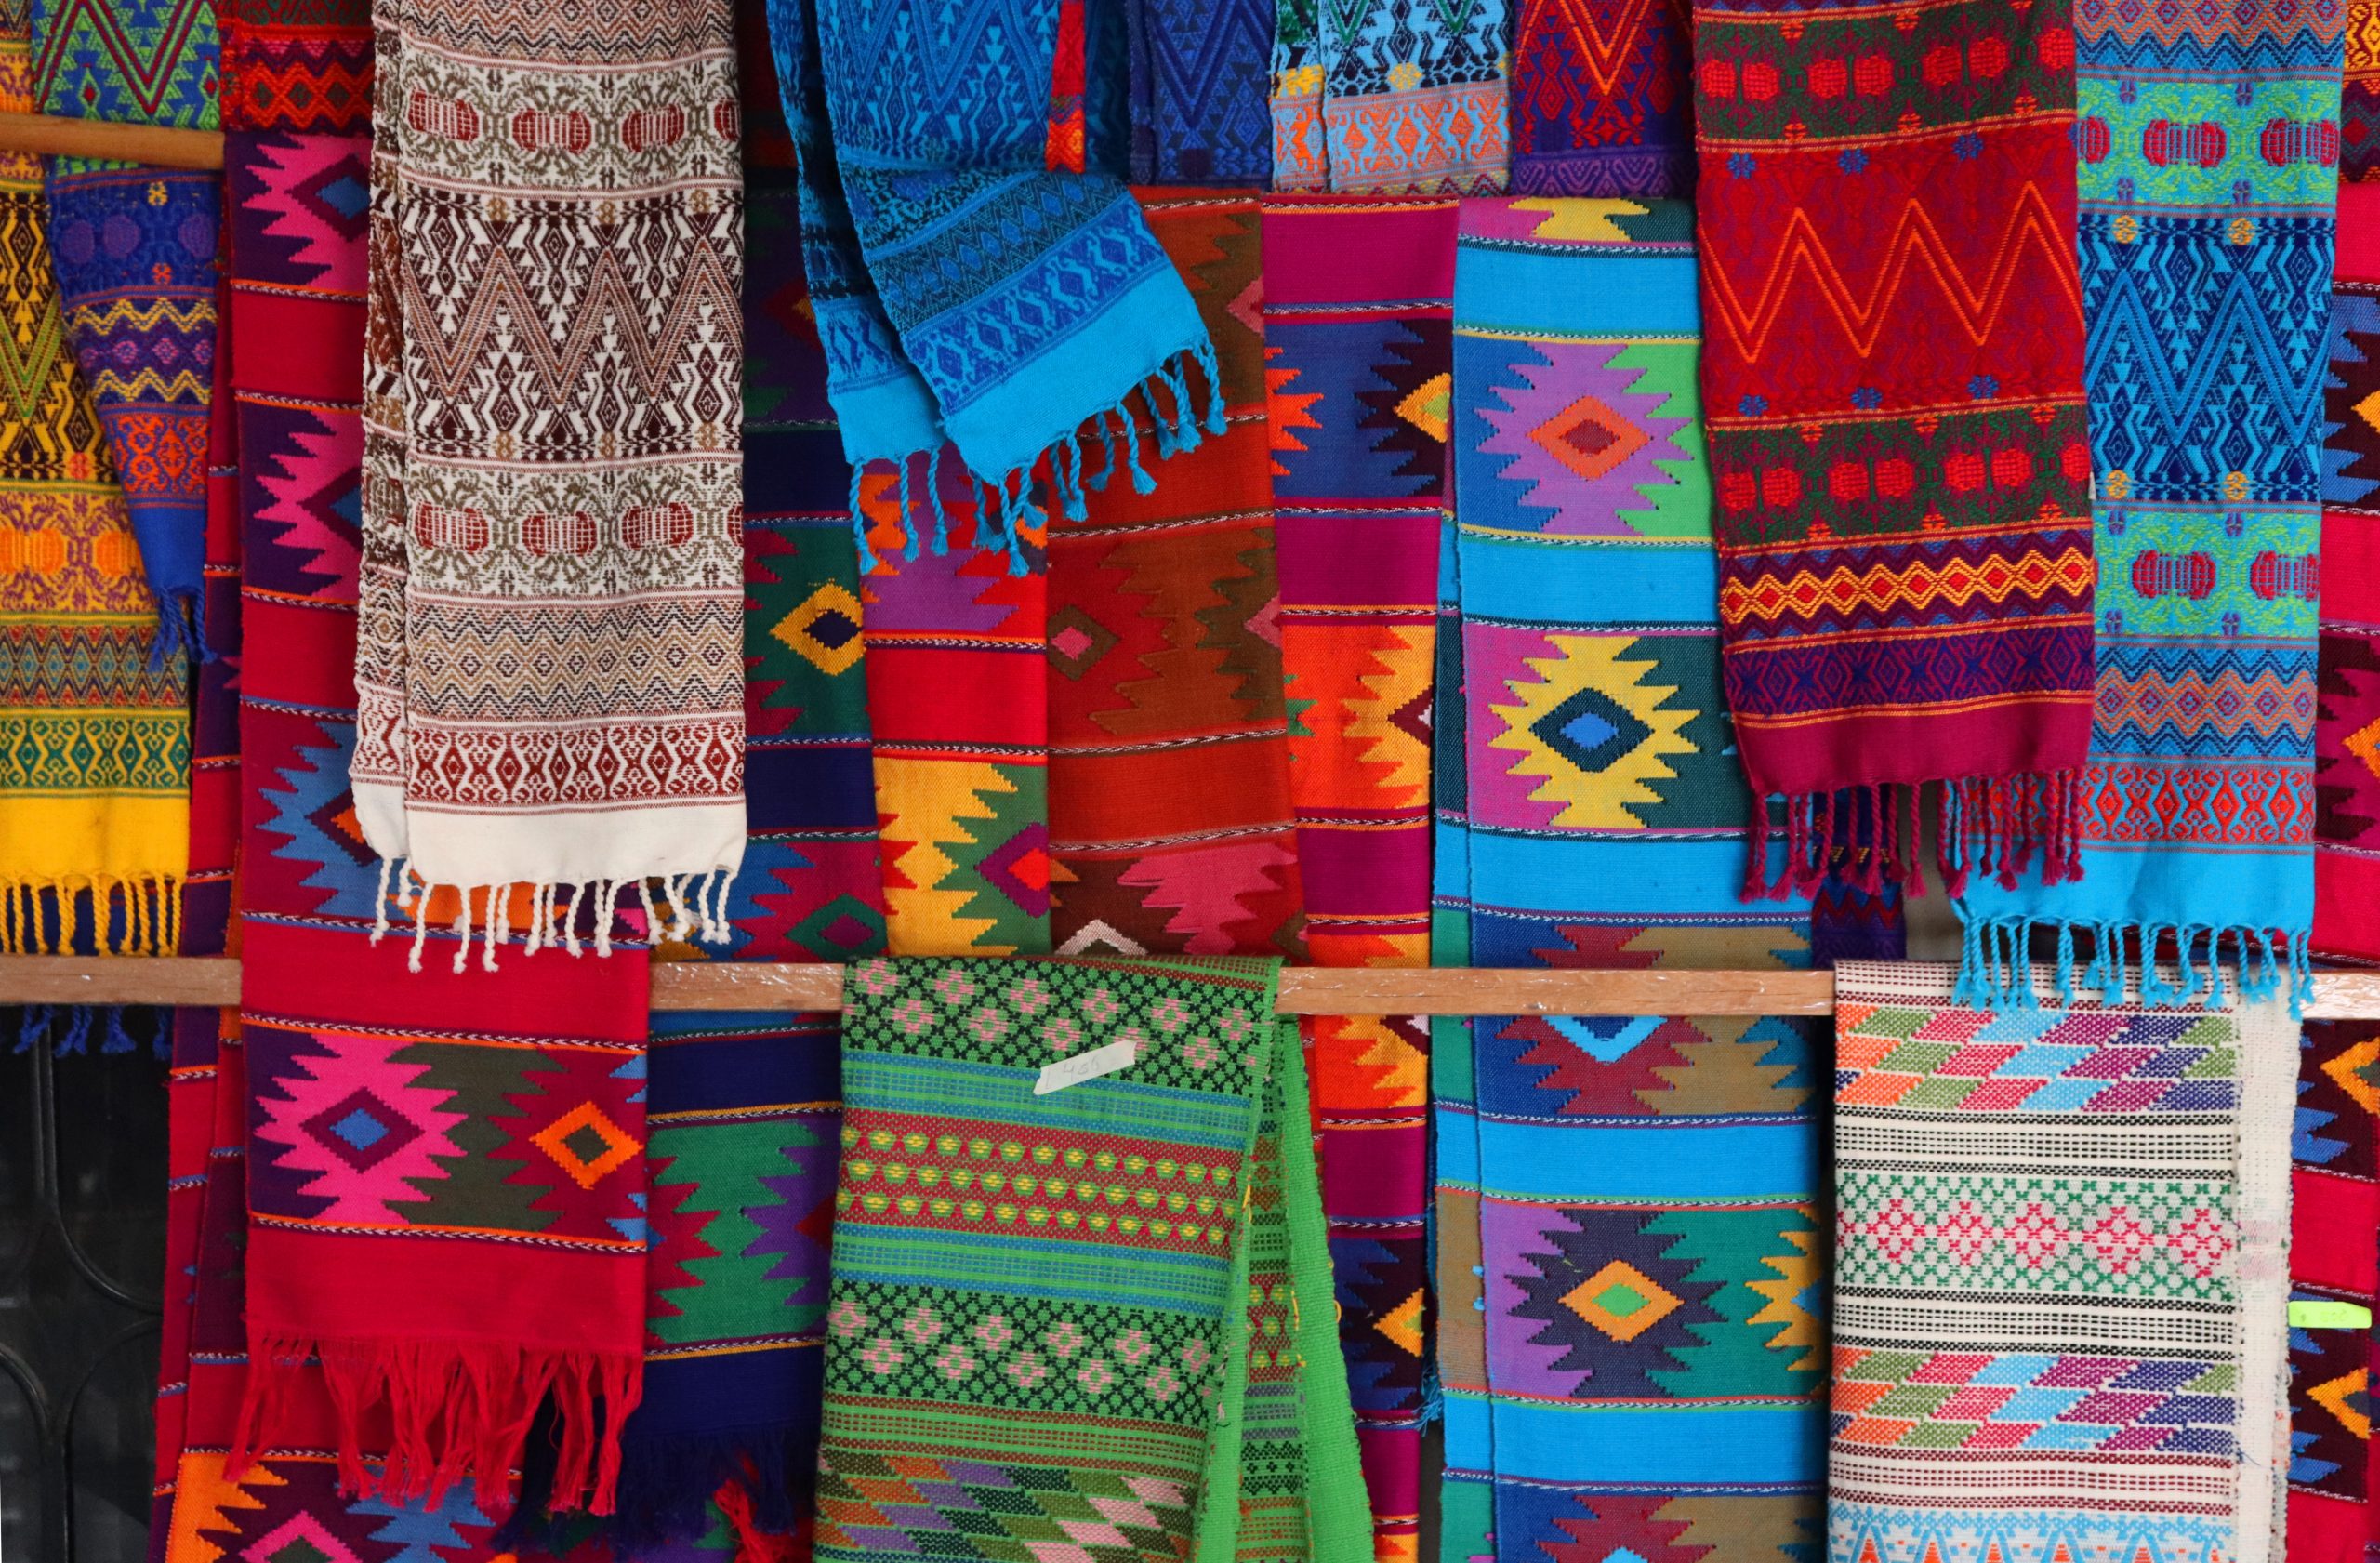 Mexican textiles as souvenirs from Mexico